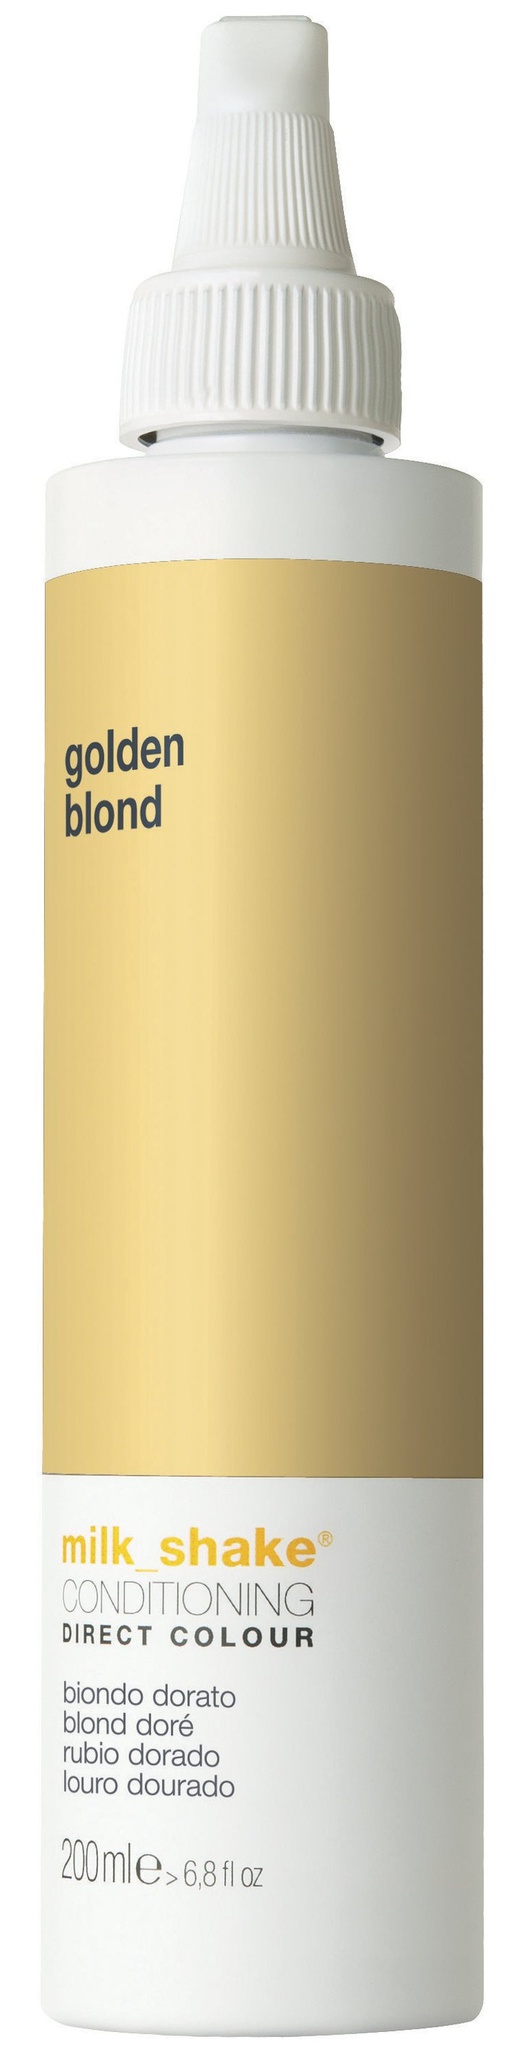 Milk shake Conditioning Direct Colour Golden Blonde